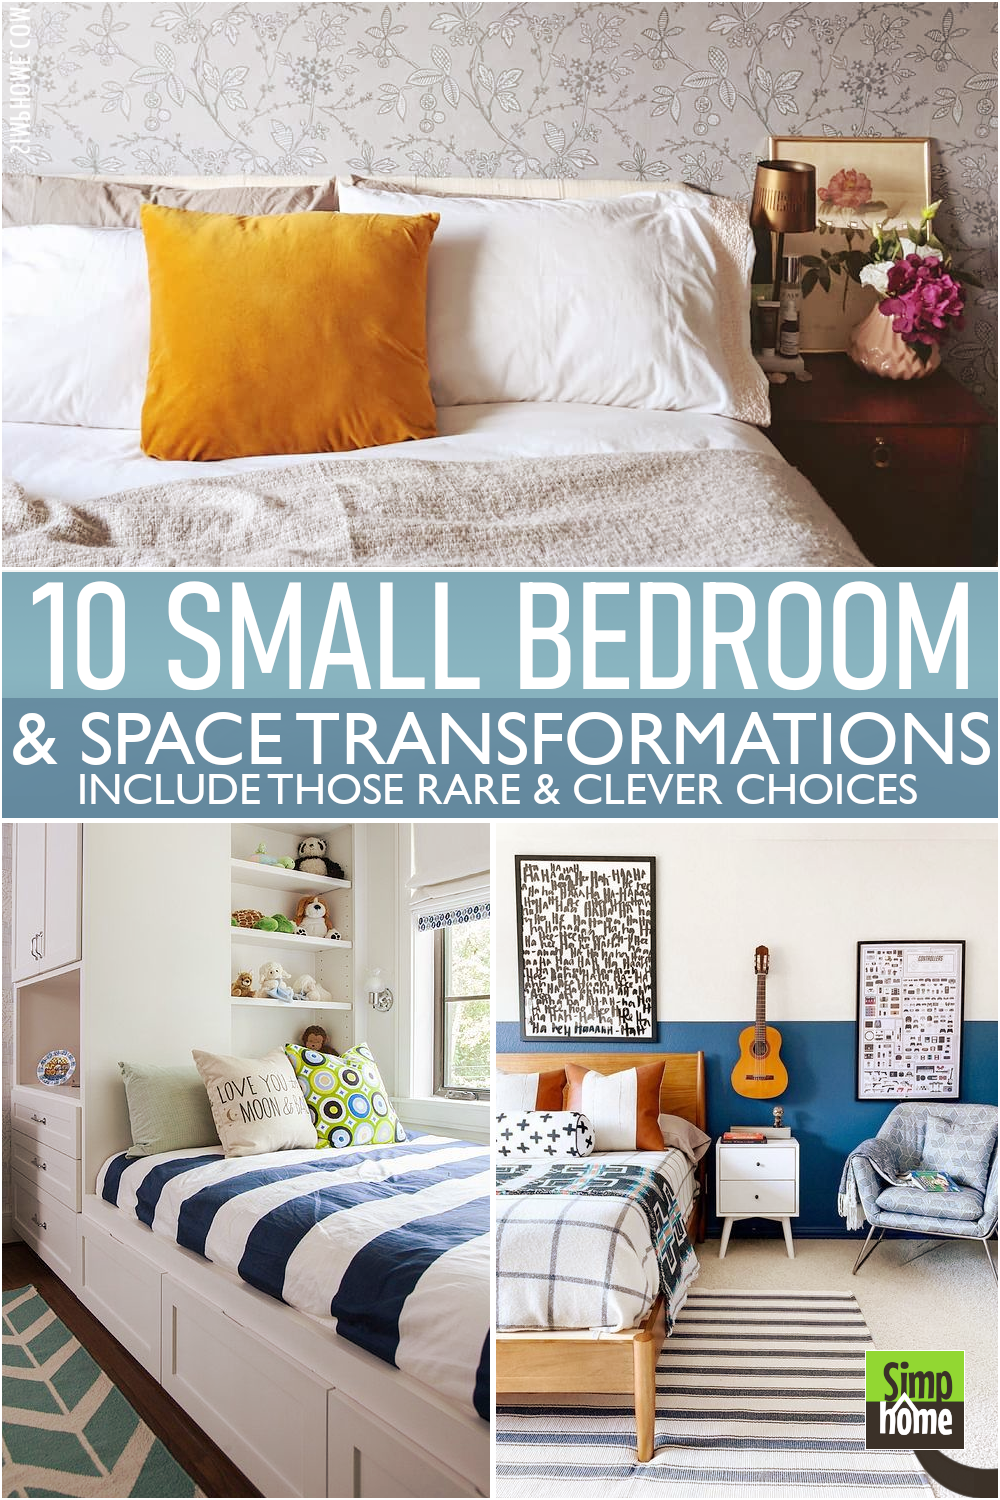 10 Small bedroom transformation ideas via Simphome